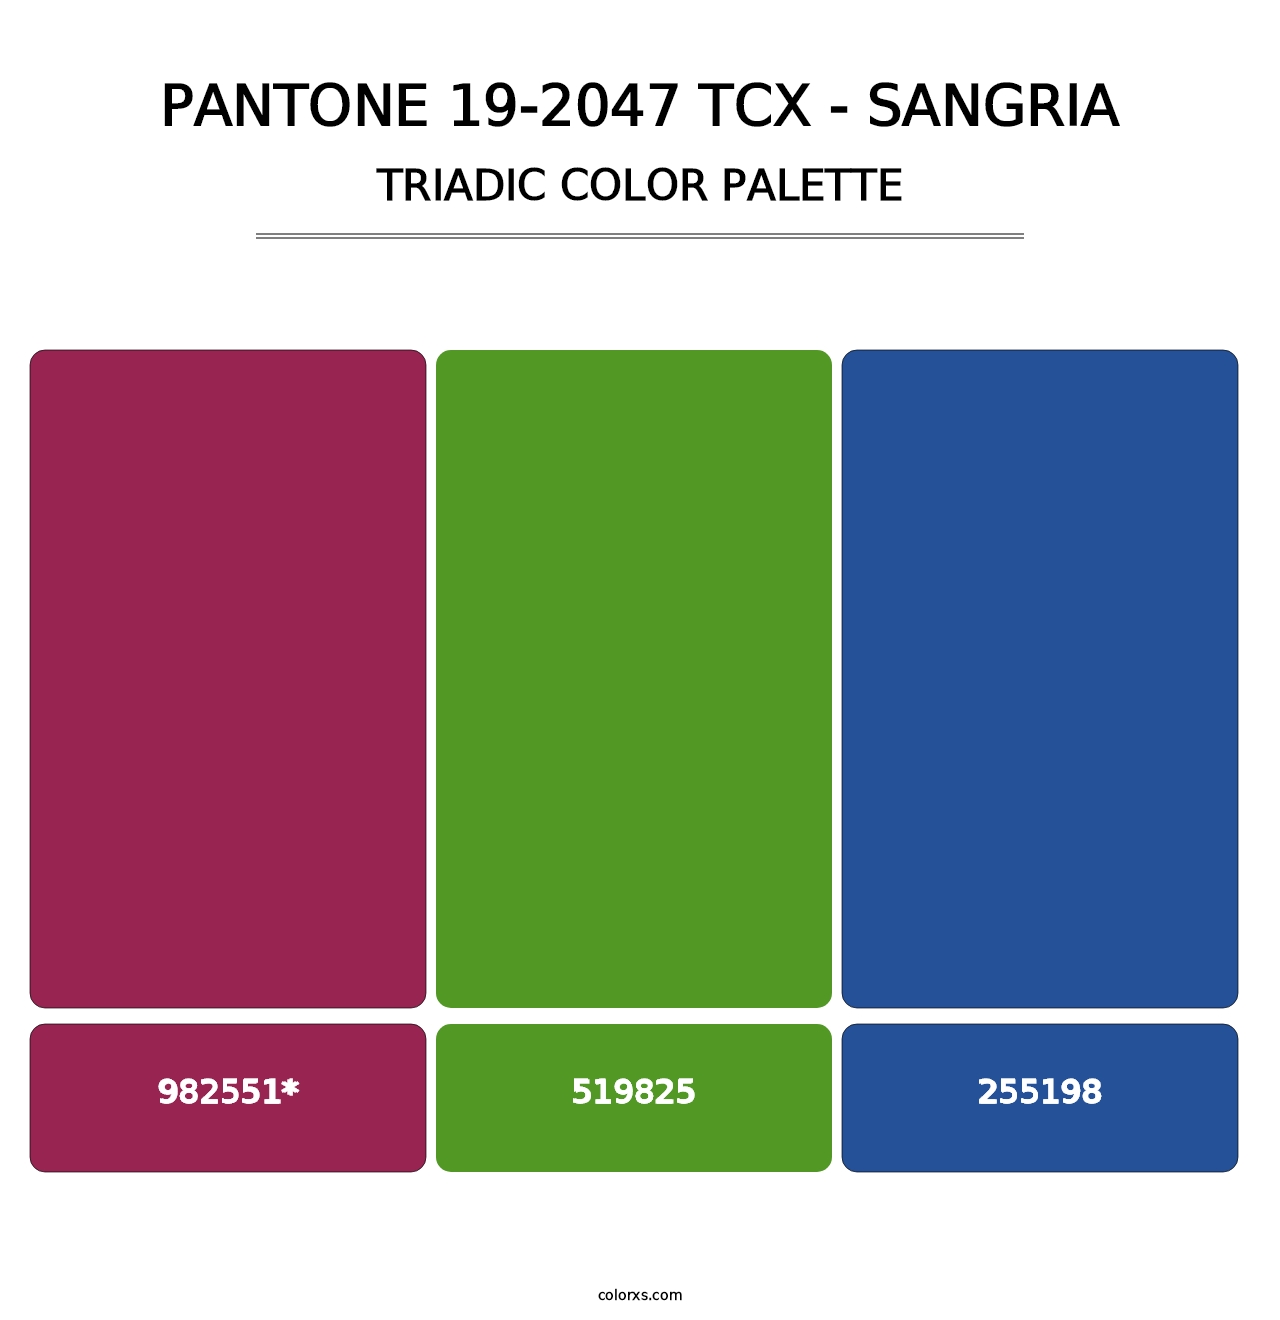 PANTONE 19-2047 TCX - Sangria - Triadic Color Palette